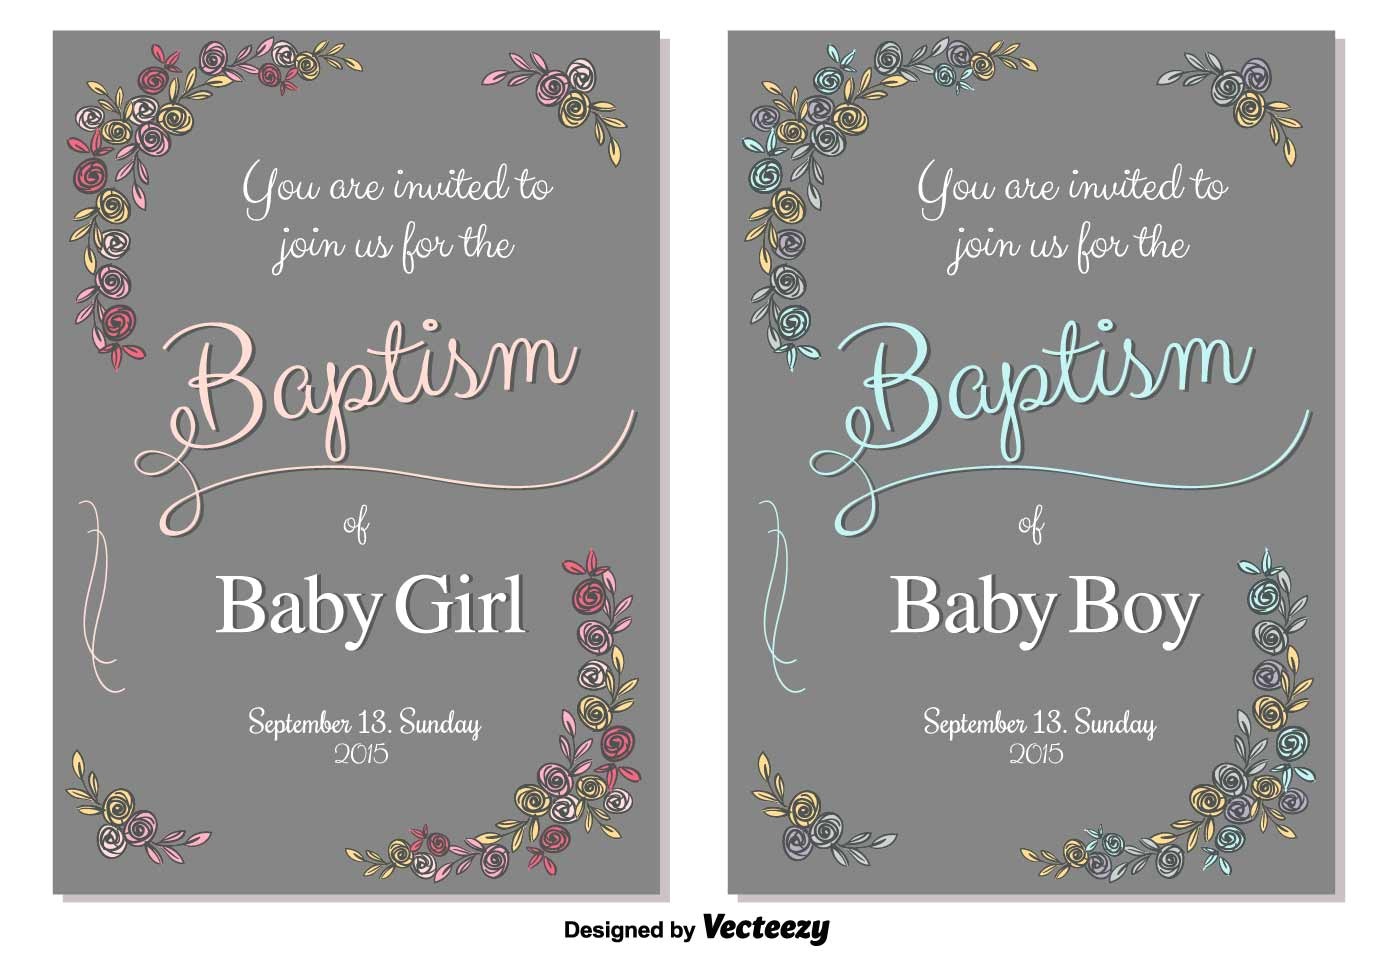 Baptism Invitations Costco Canada Invitation Templates for Christening Free Download Image